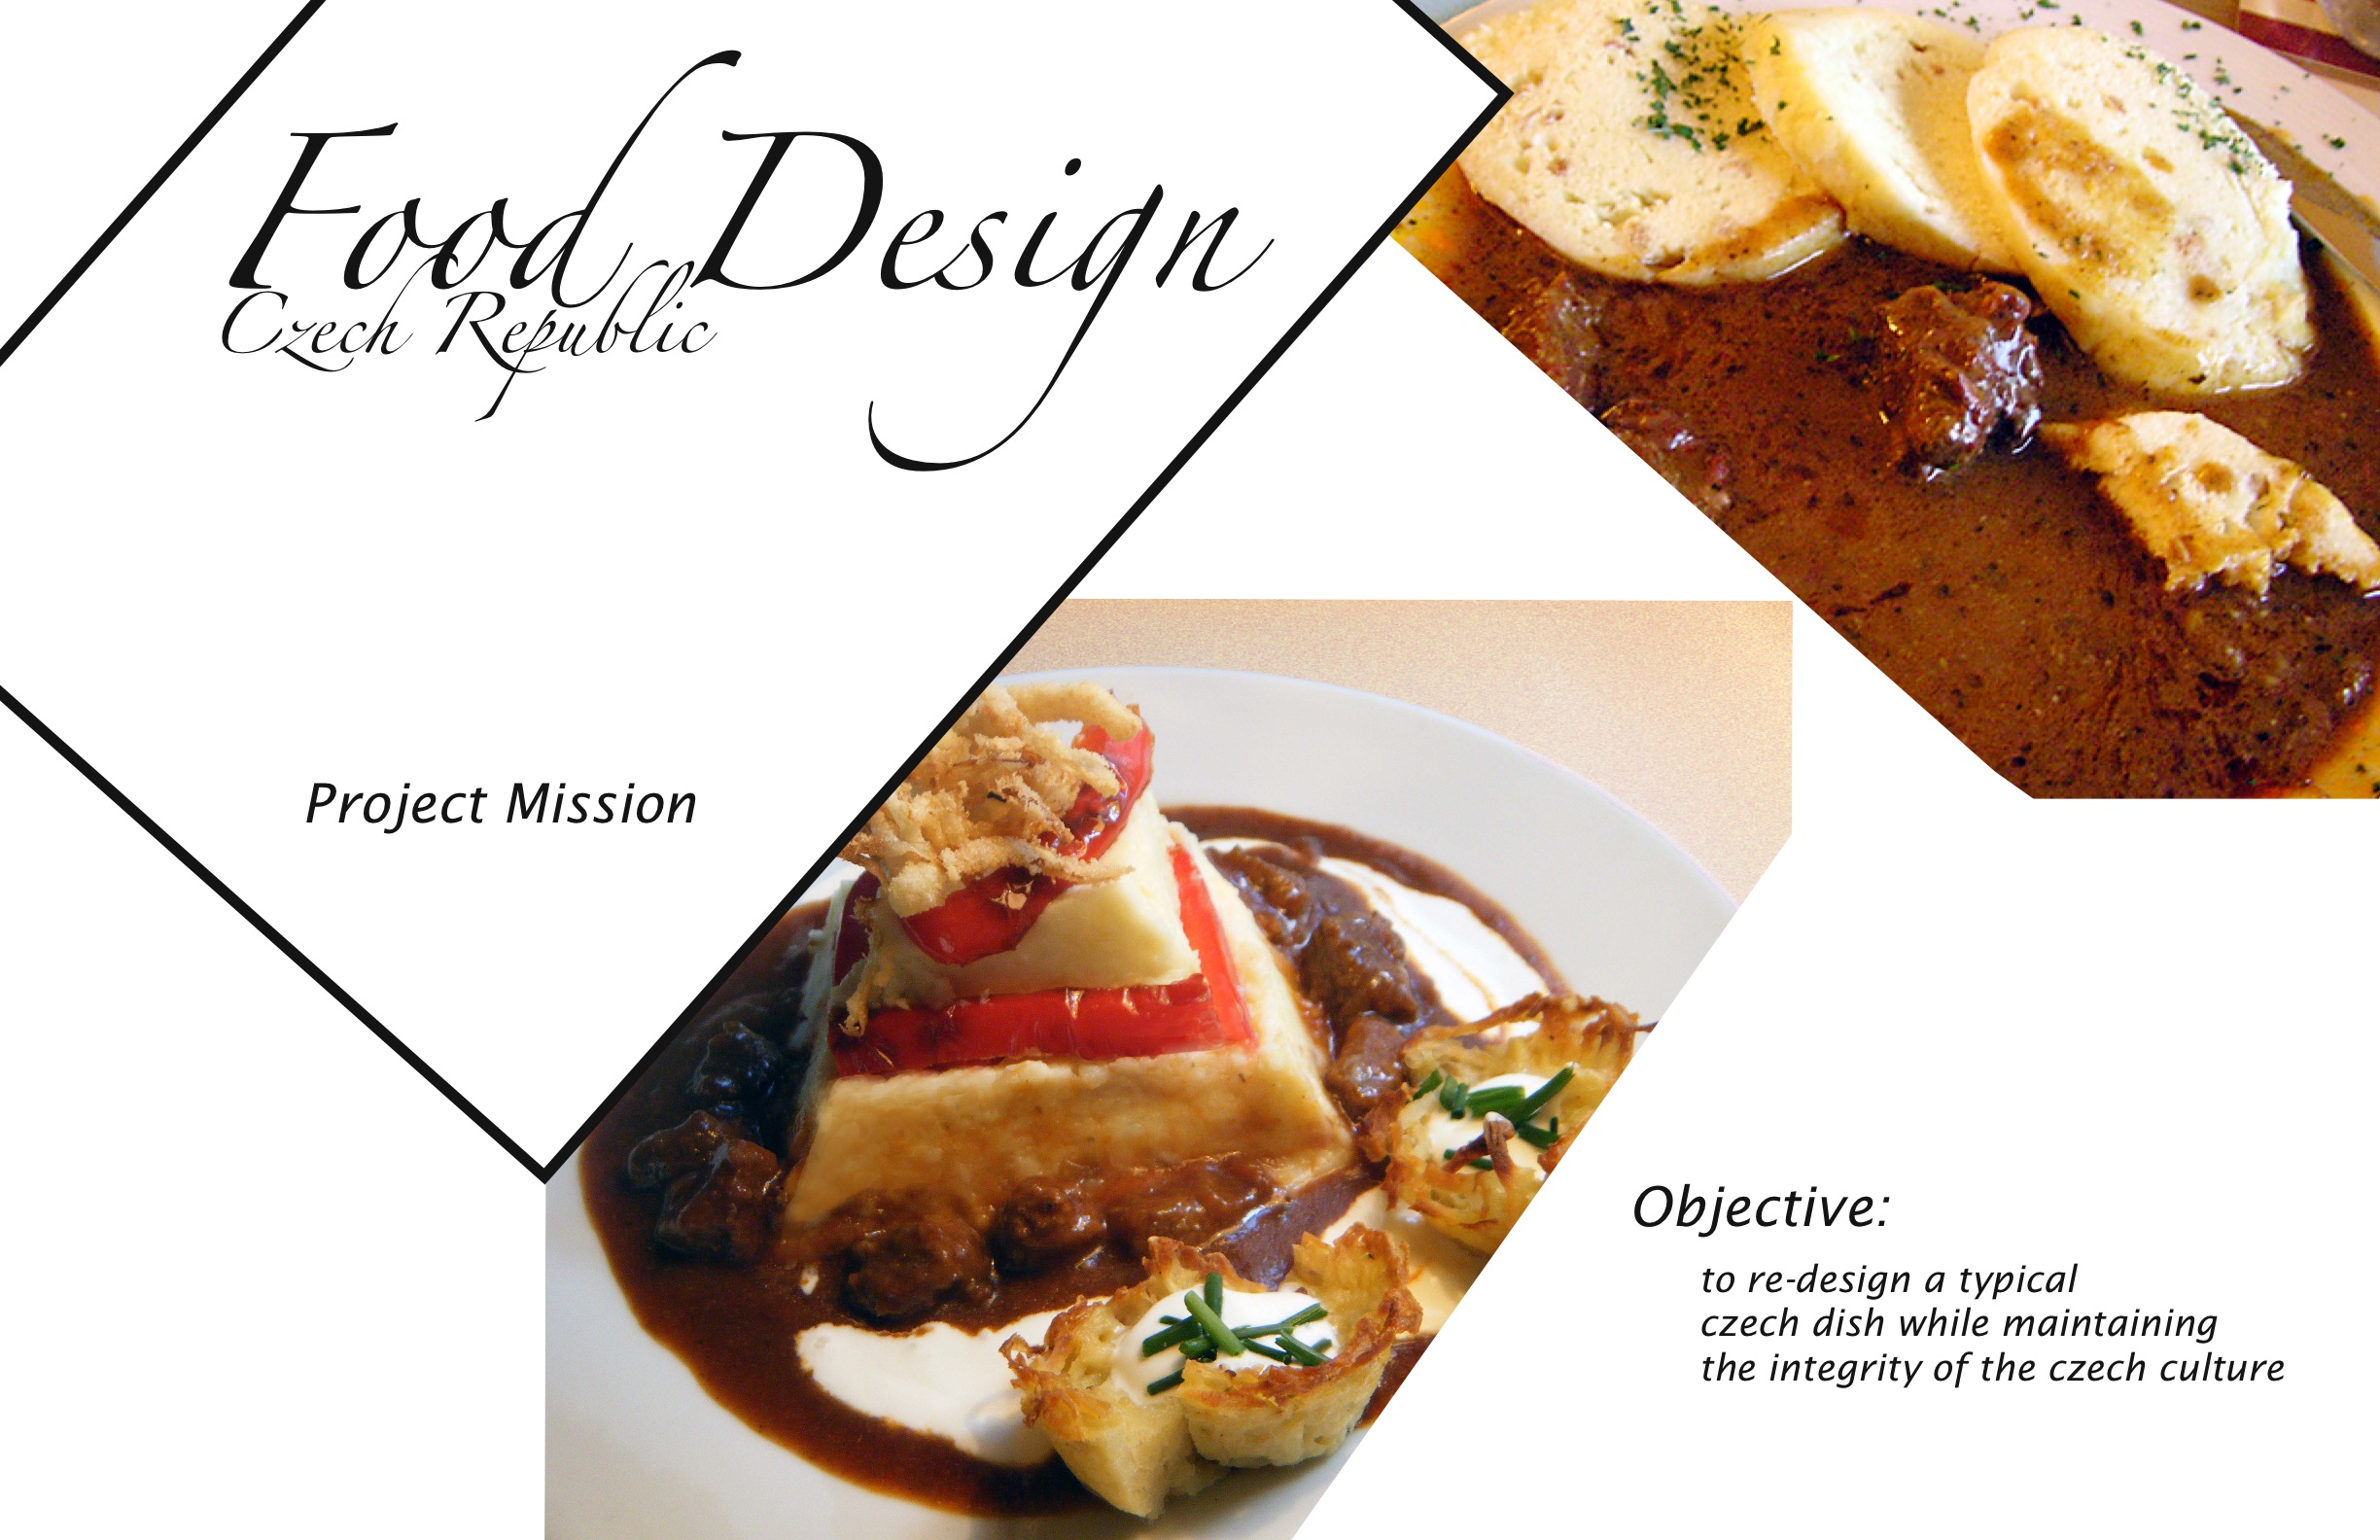 Food Design | audreyrbryson